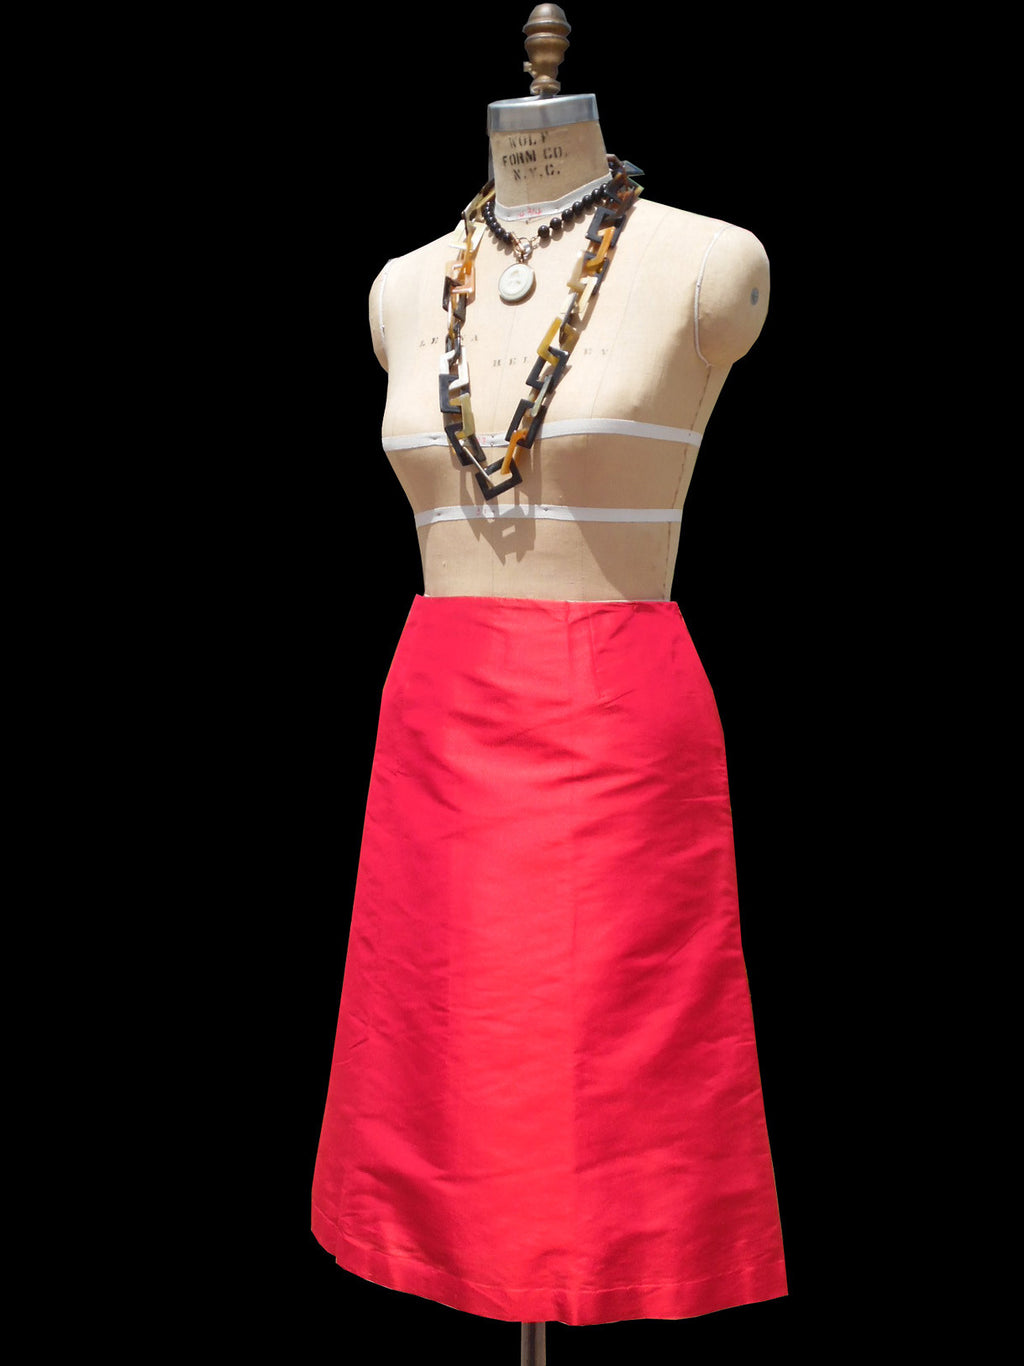 Audrey Skirt Thai Silk Taffeta Red